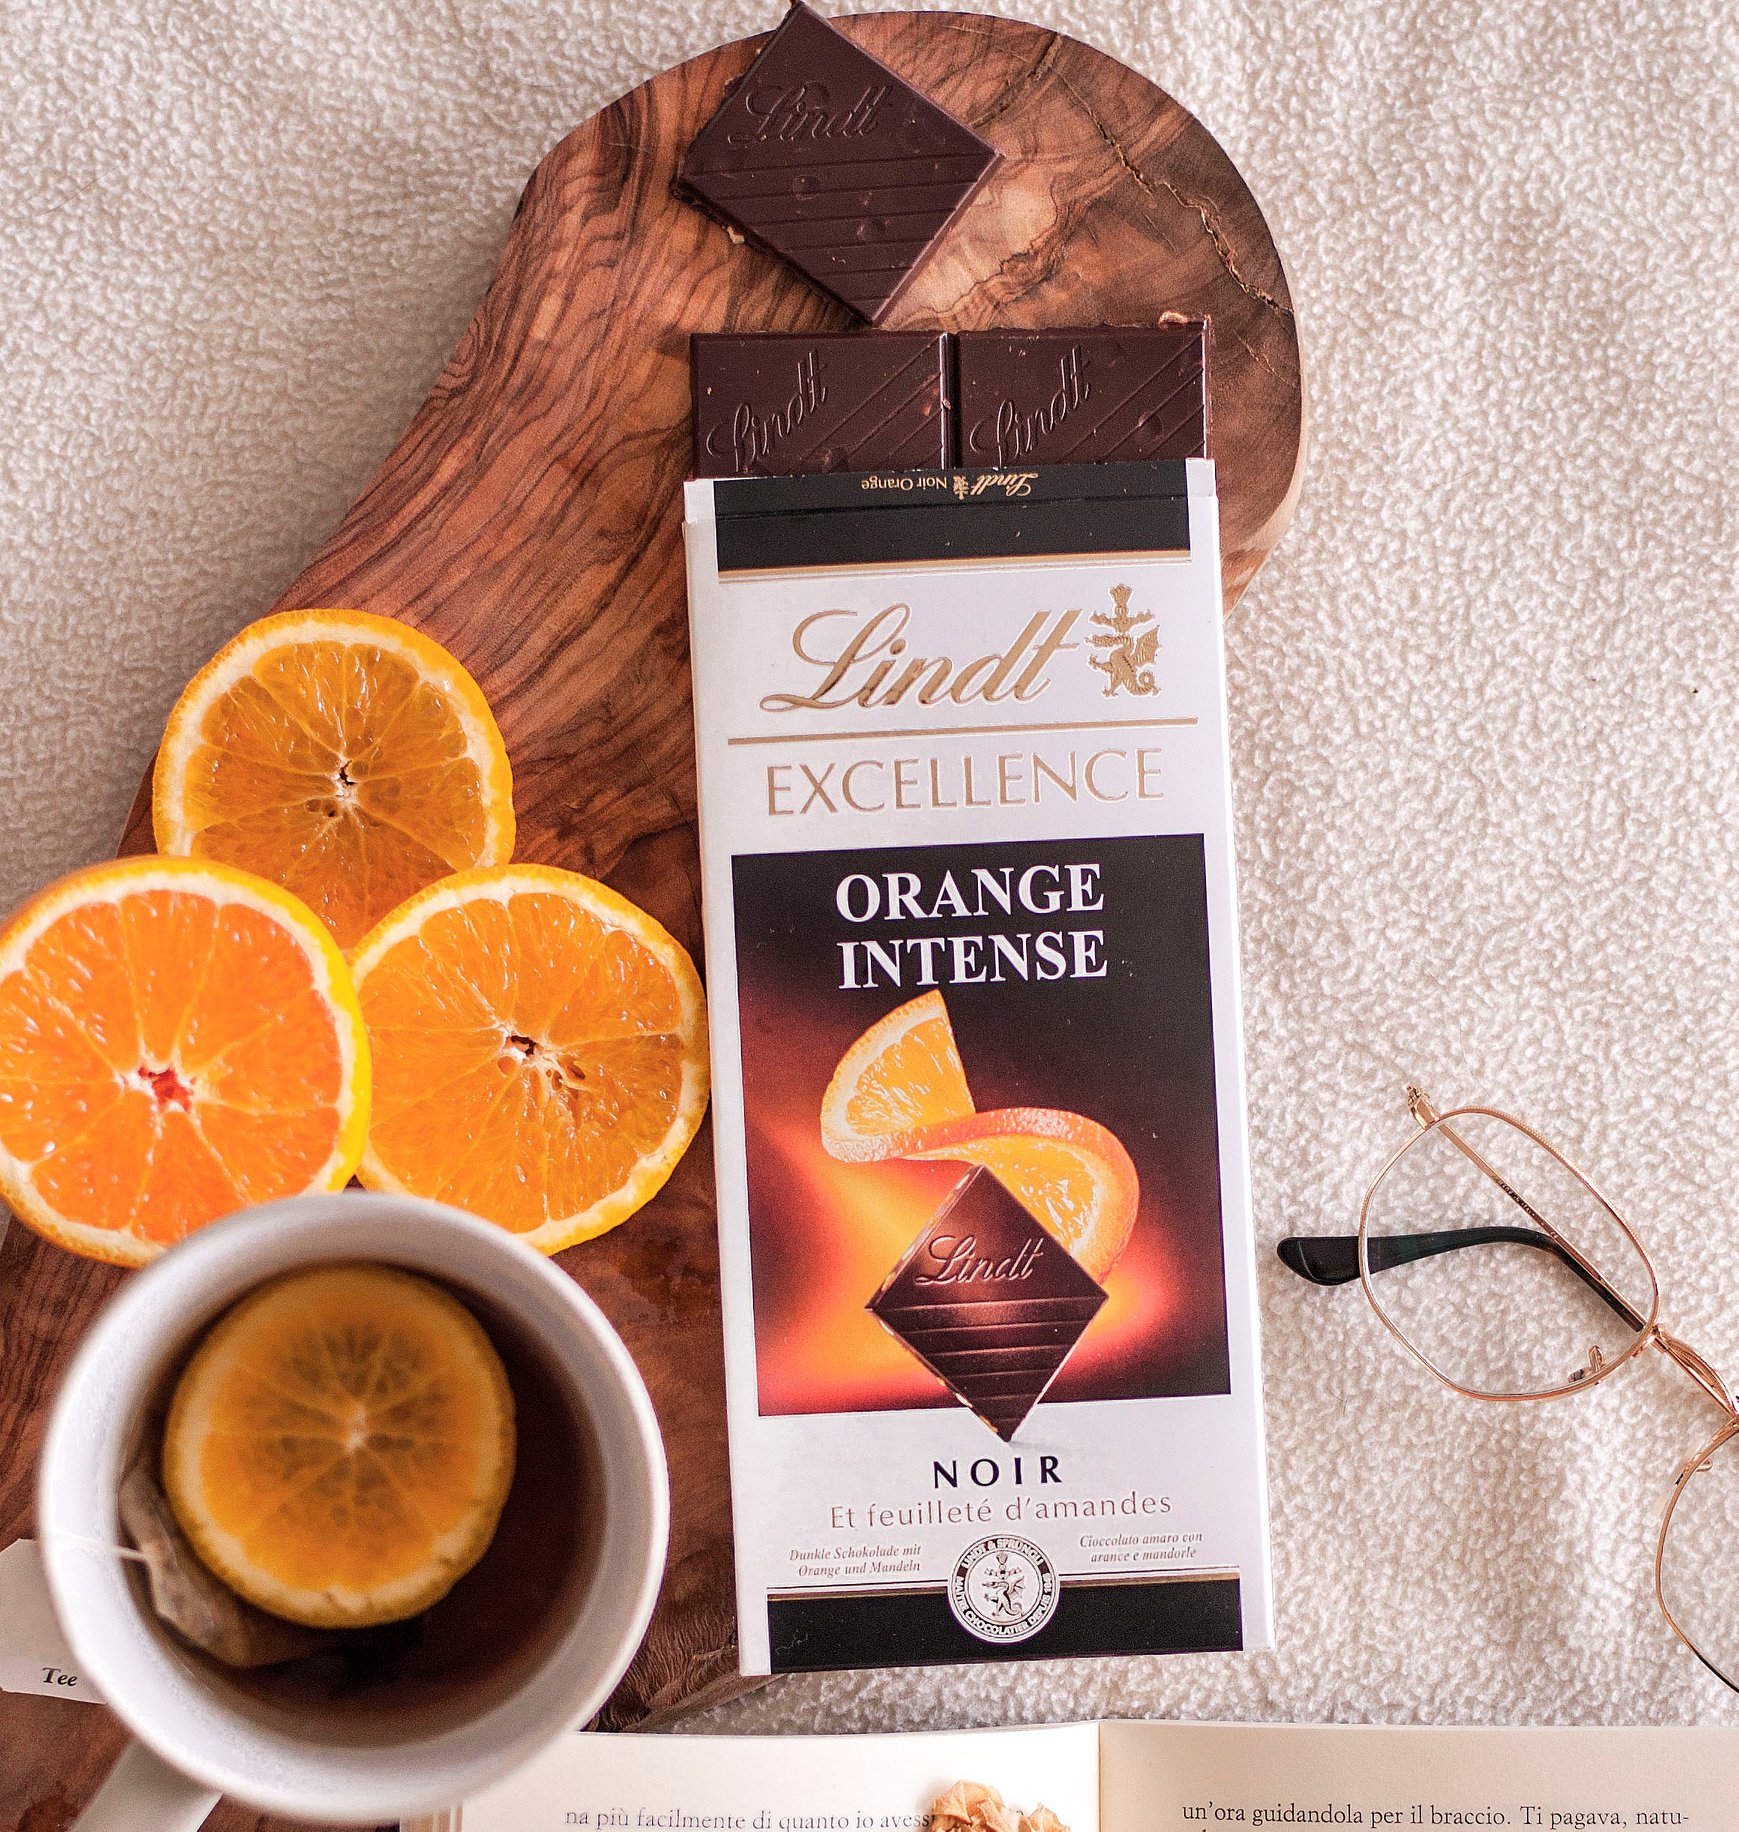 Socola đen nhân cam 100g - Chocolate Lindt Excellence Noir Orange Intense